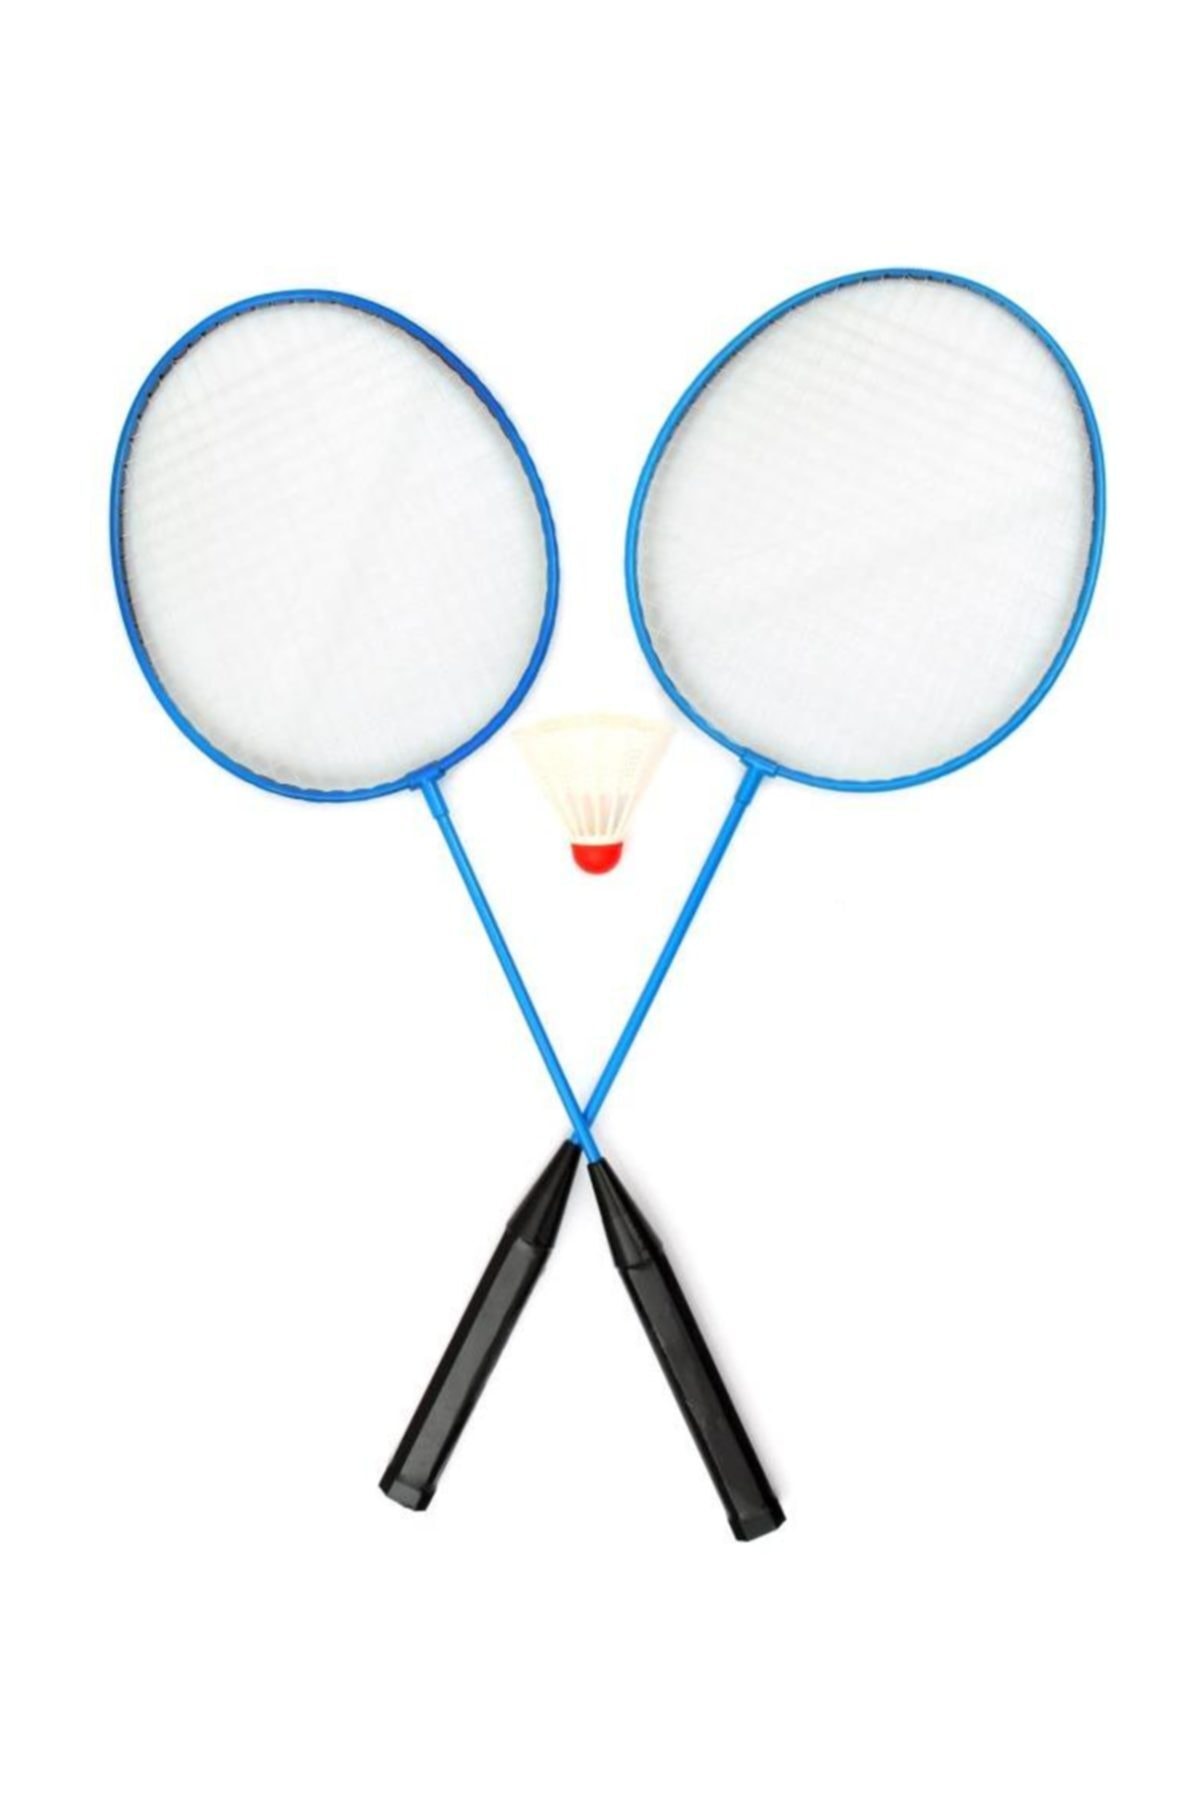 Bs 1100 Badminton Raket